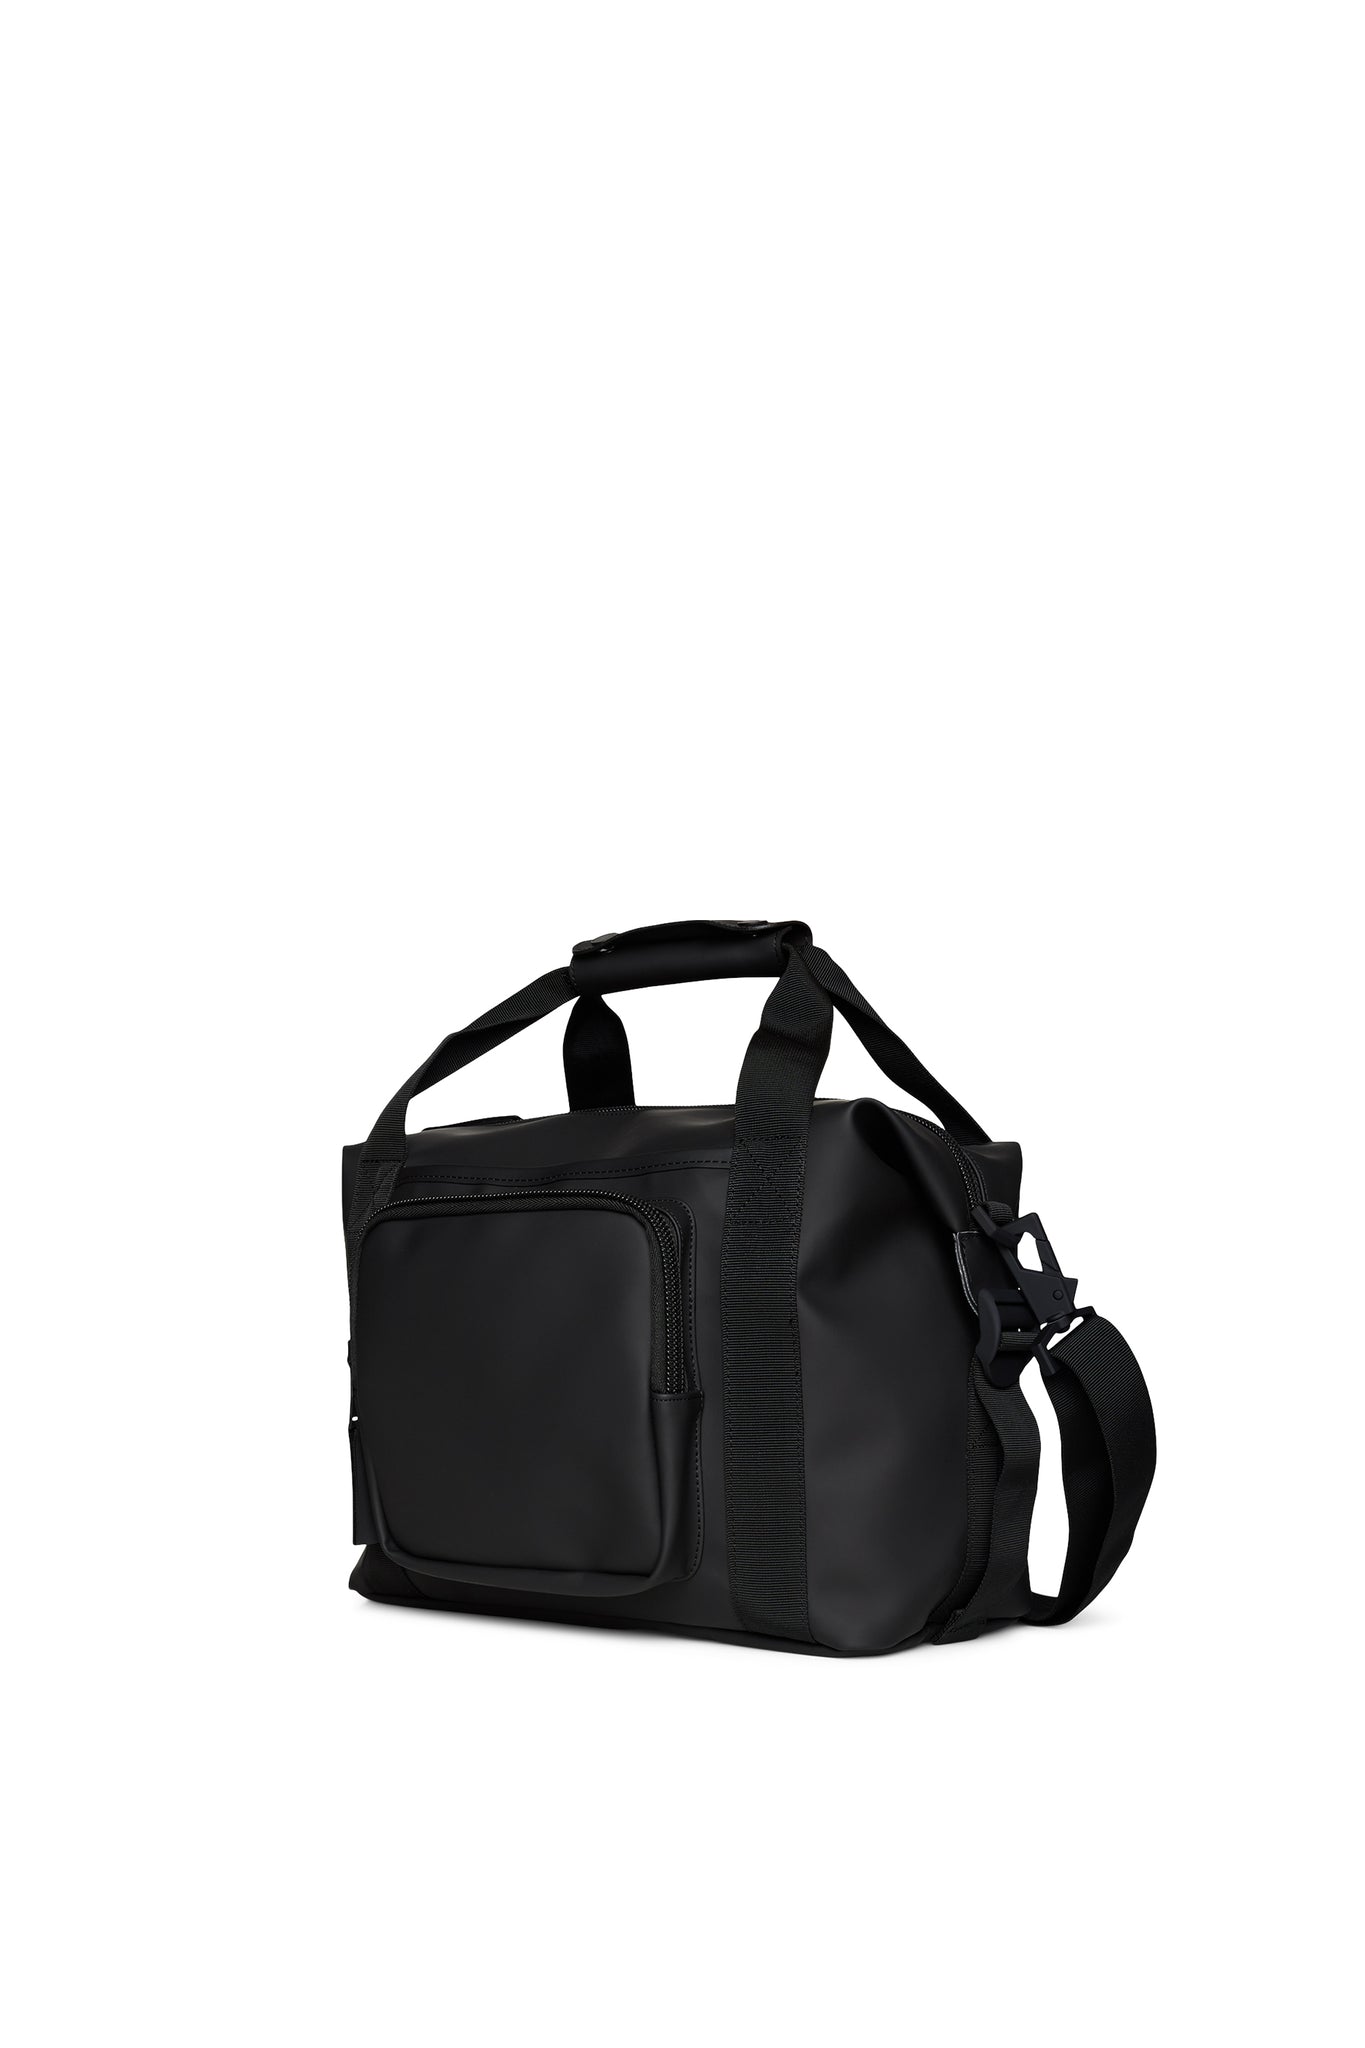 Texel Black Kit Bag